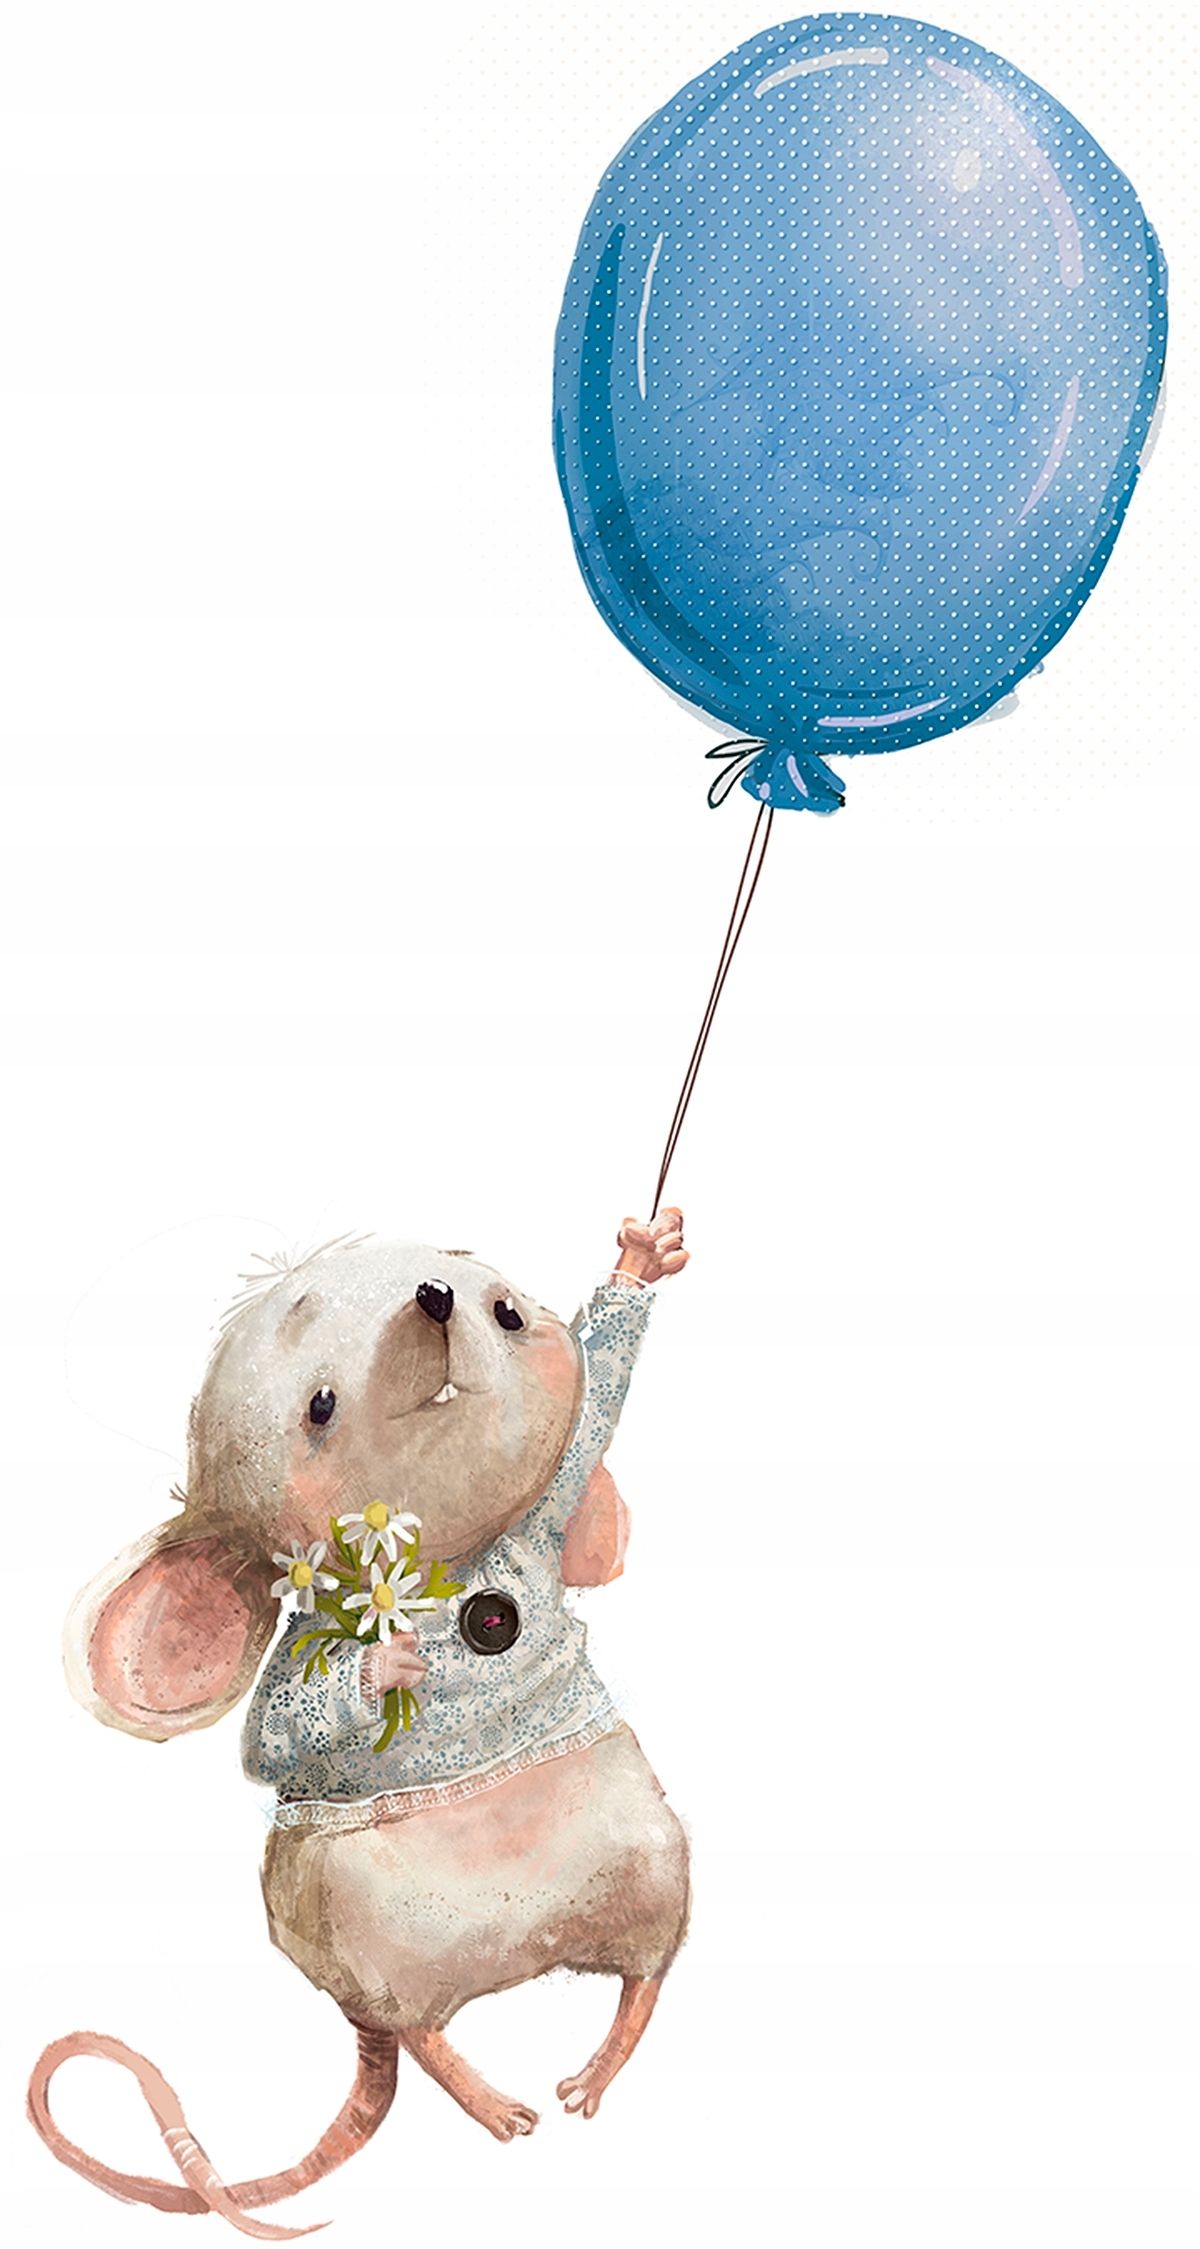 Ballon mit Wandtattoo - Maus